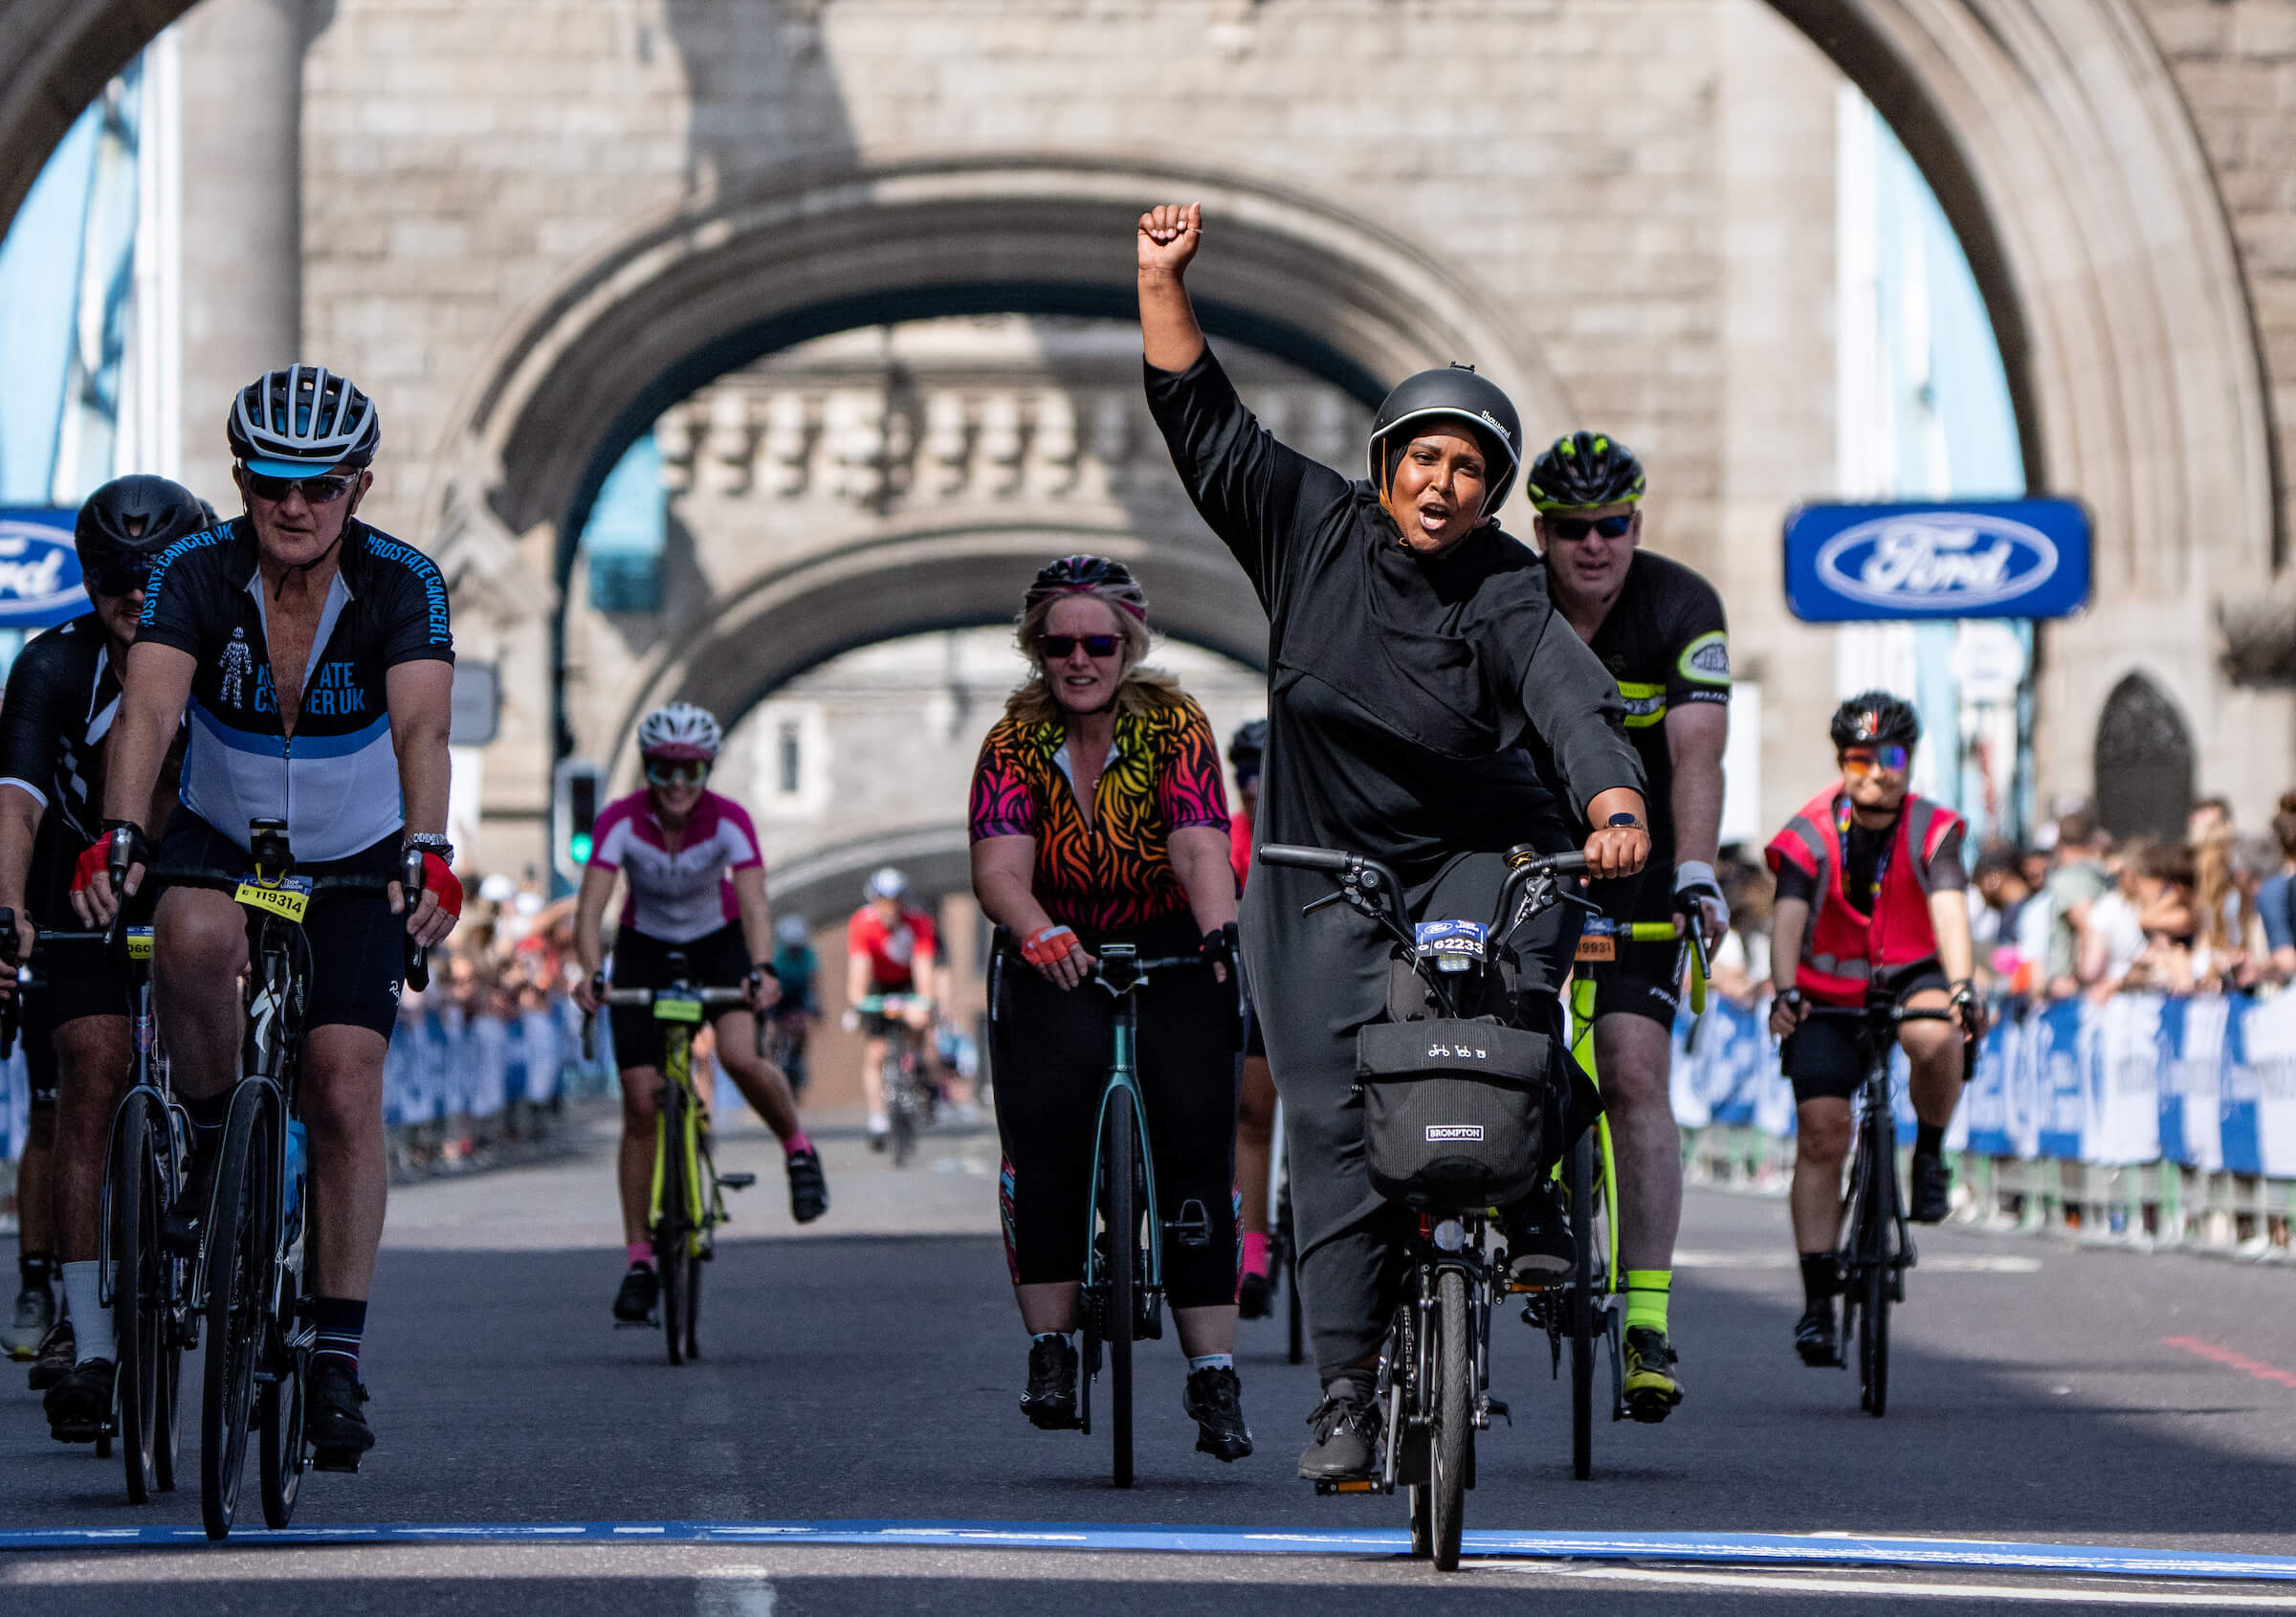 Triumphant cyclists at Tower Bridge